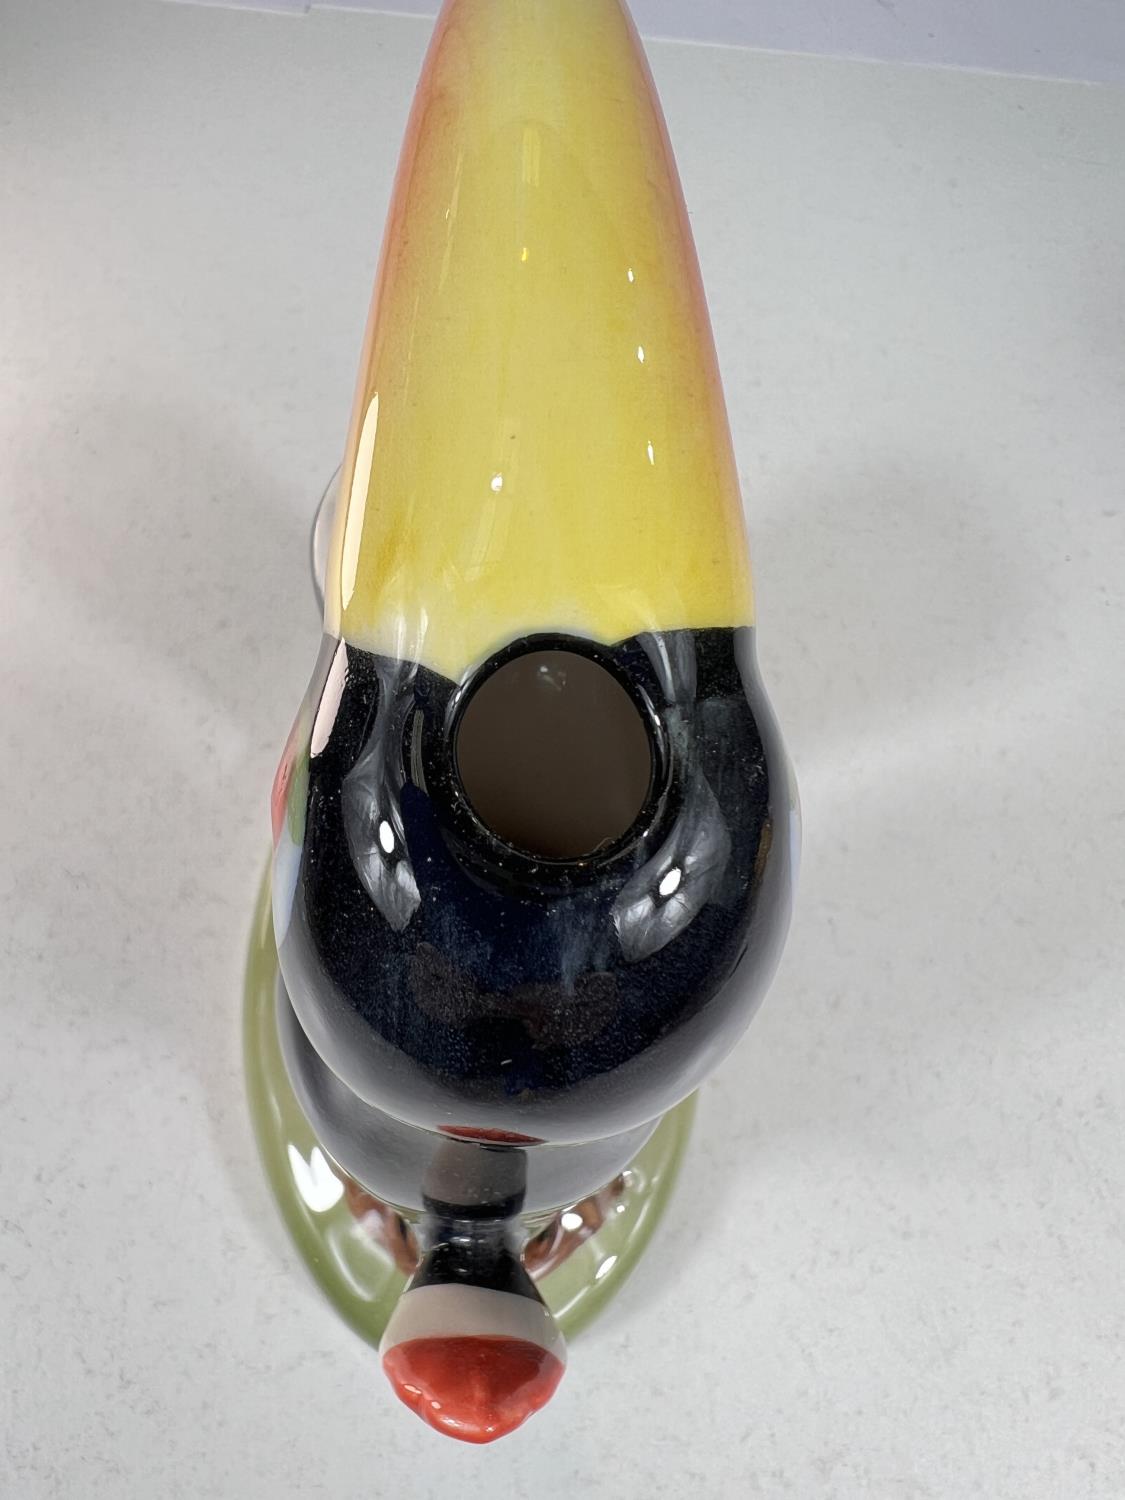 Guinness advertising Carlton ware toucan ceramic lamp base - Image 3 of 4